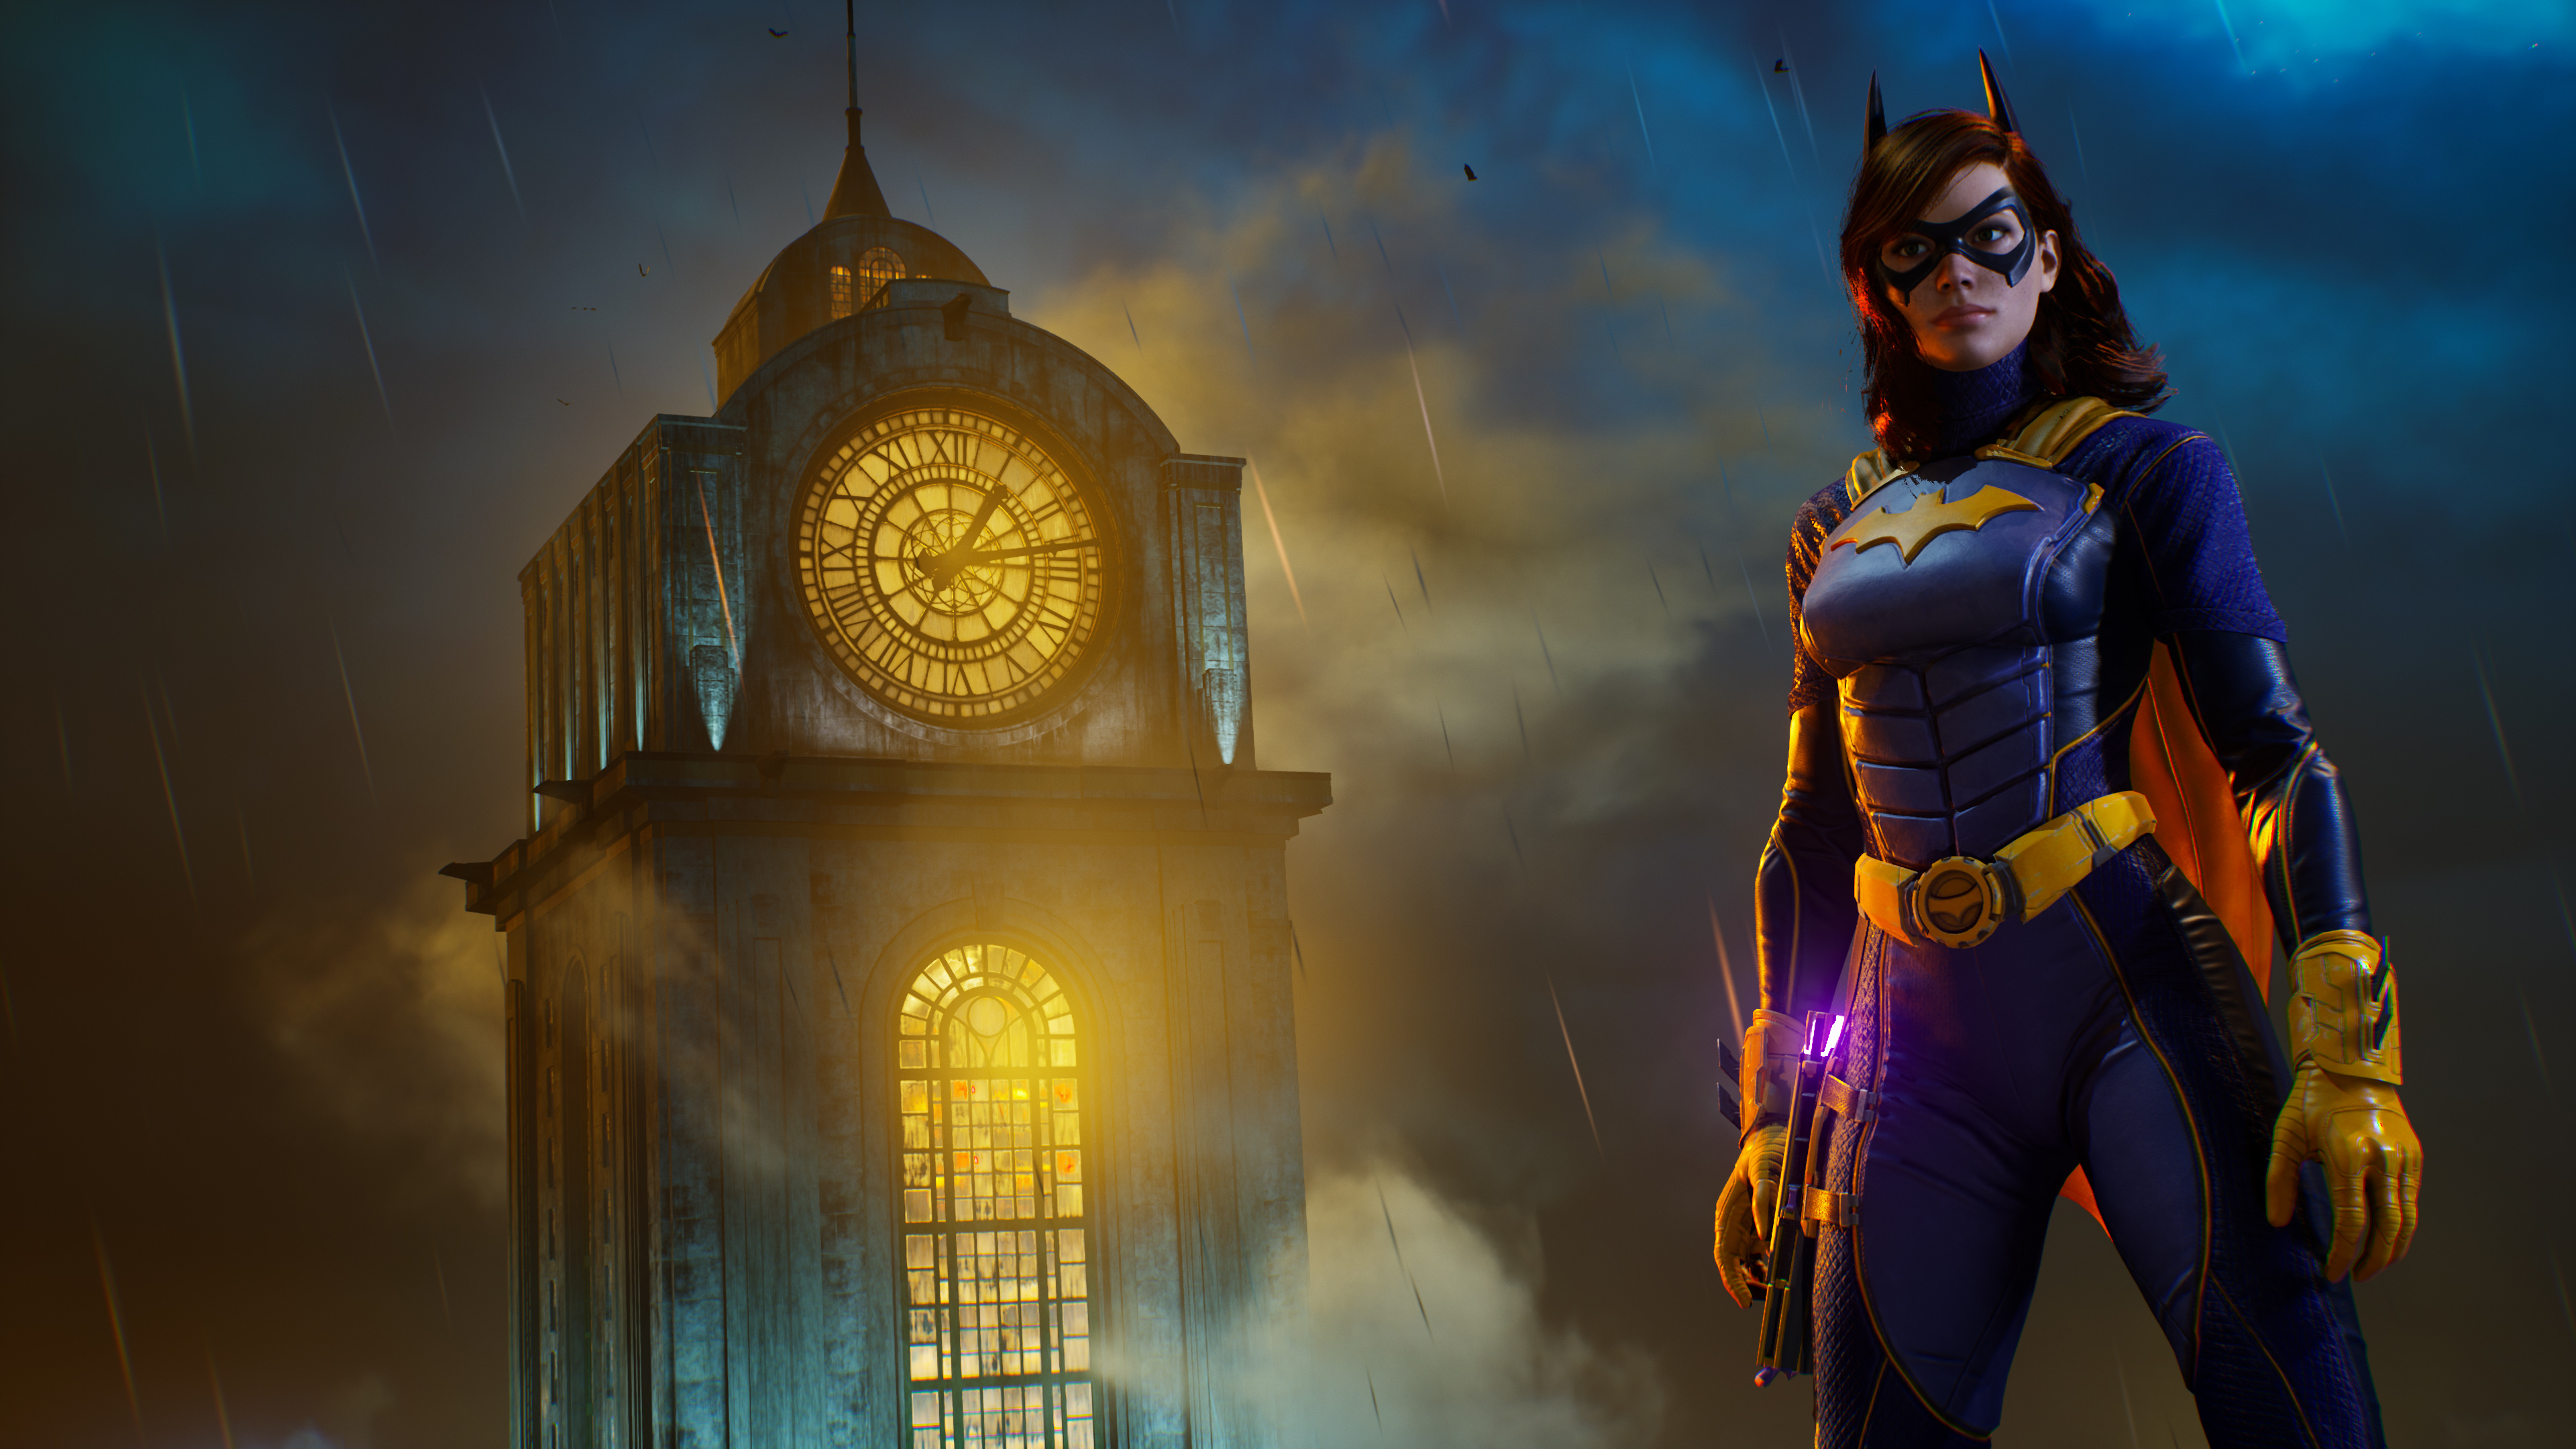 Gotham_nights_Bat_Girl_Reveal_Screenshot-495115f4118bf1fc272.56476848.jpg